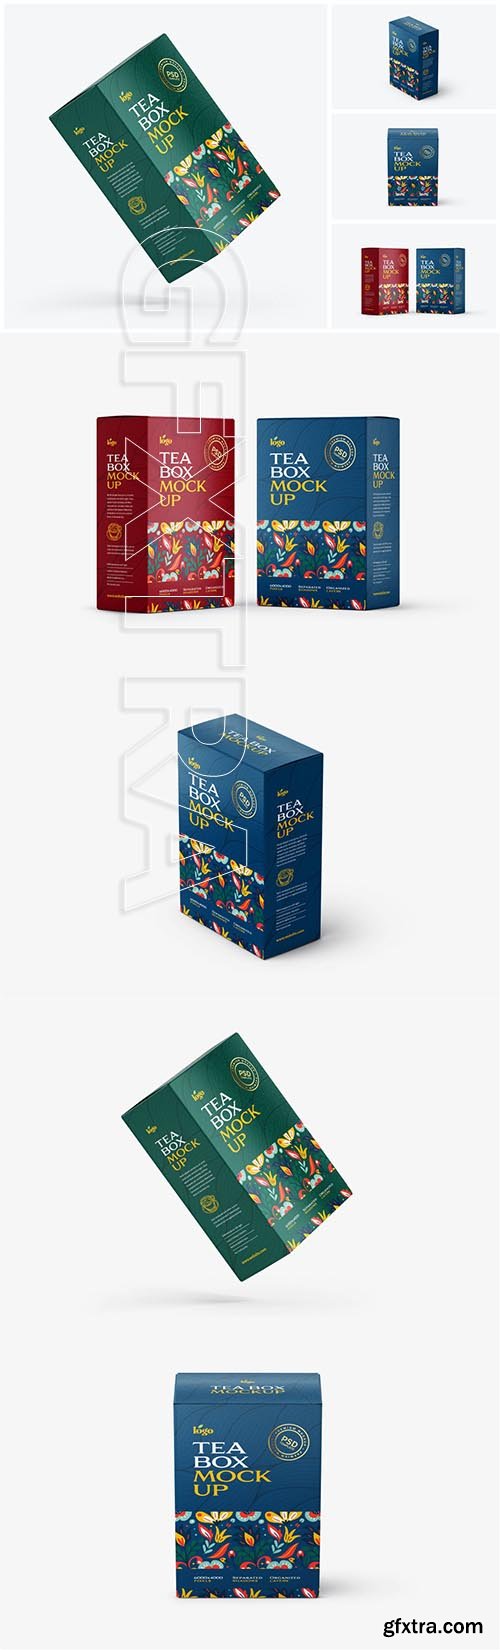 Tea Box Packaging Mockup Set